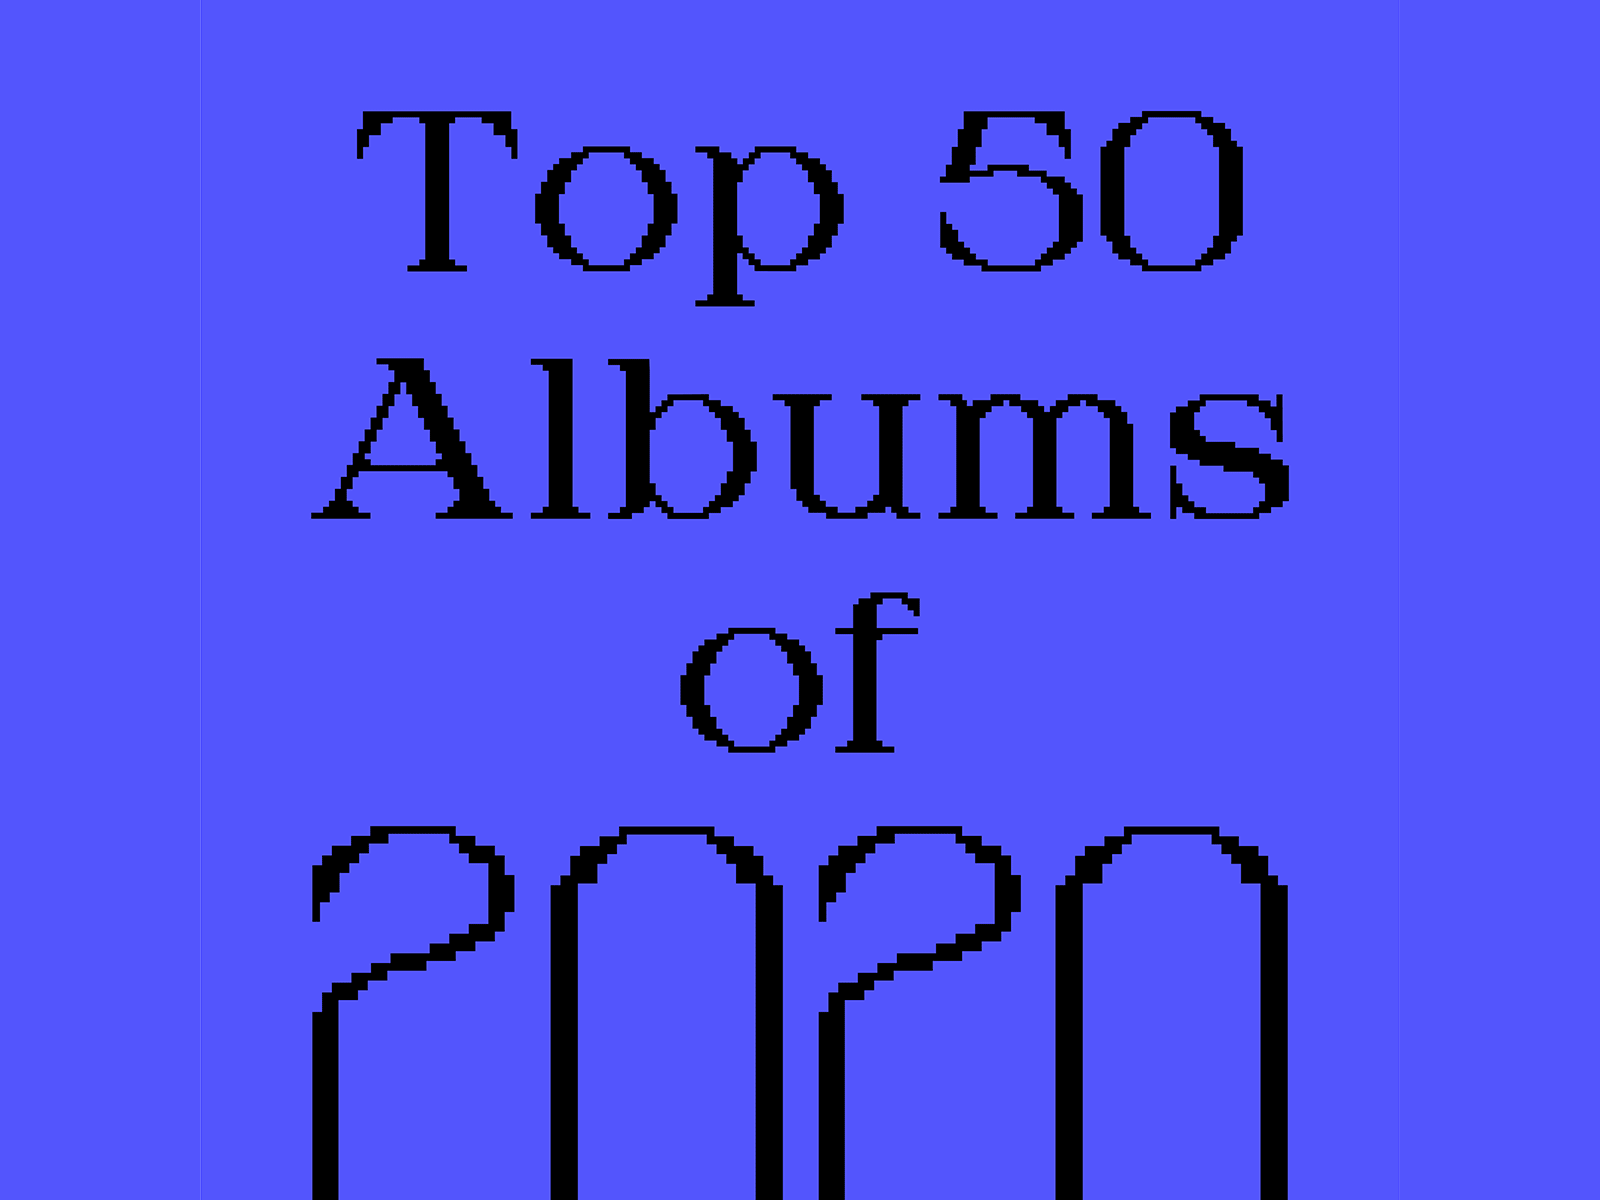 Best music of 2020 2020 album art best color digital music typography